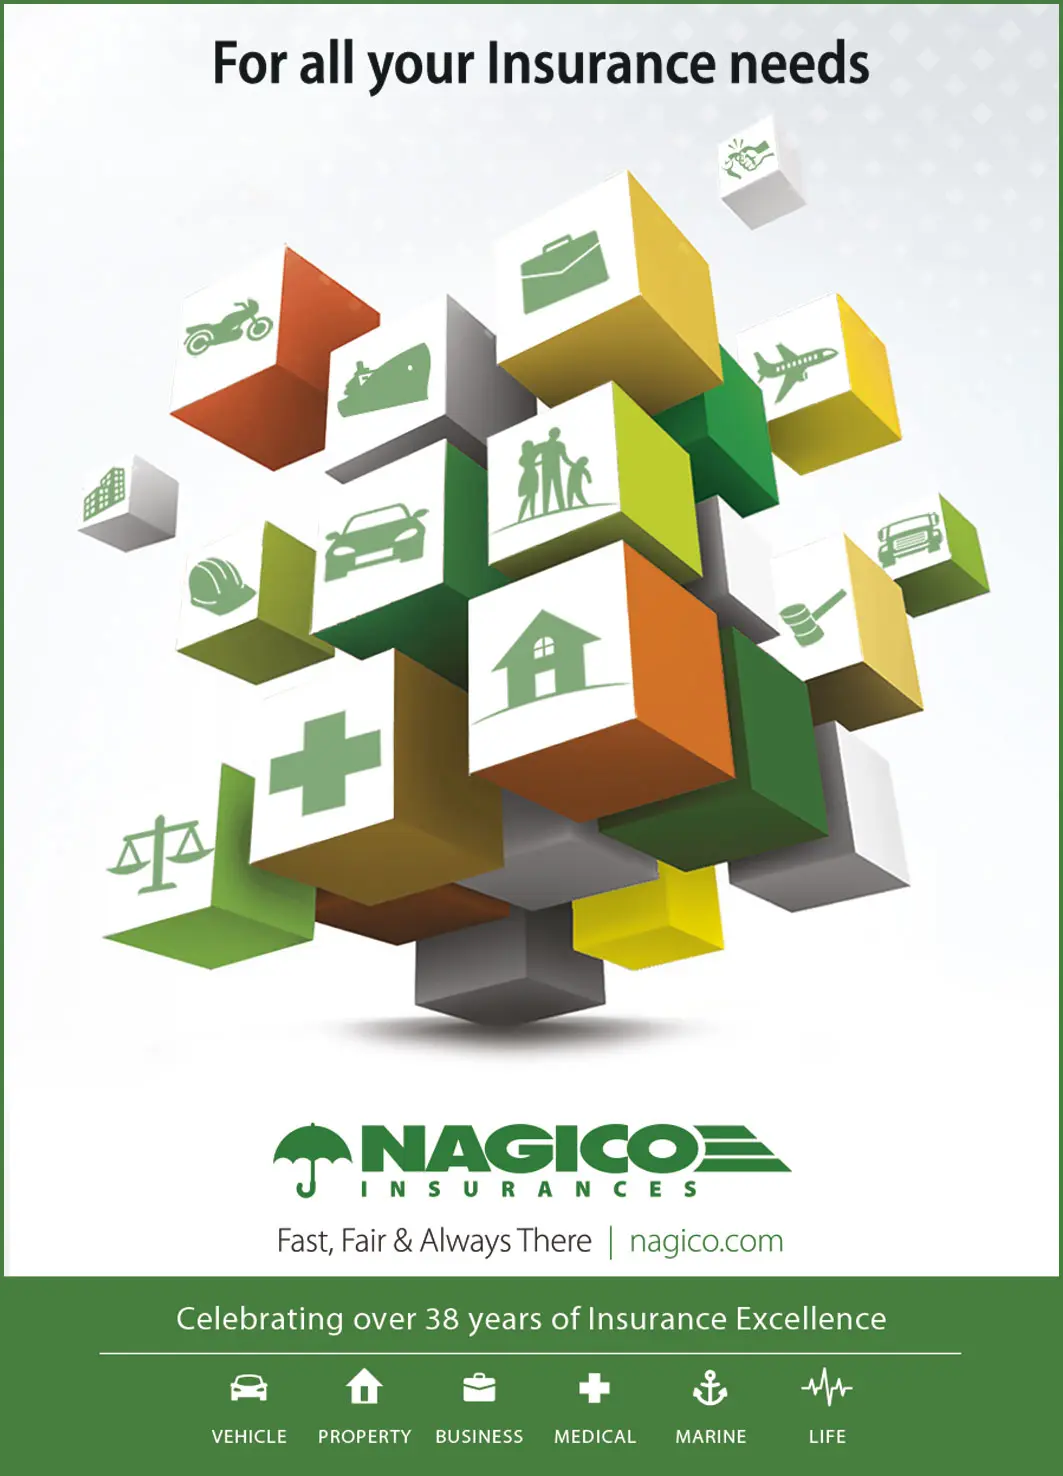 St Maarten Telephone Directory - Nagico Insurances